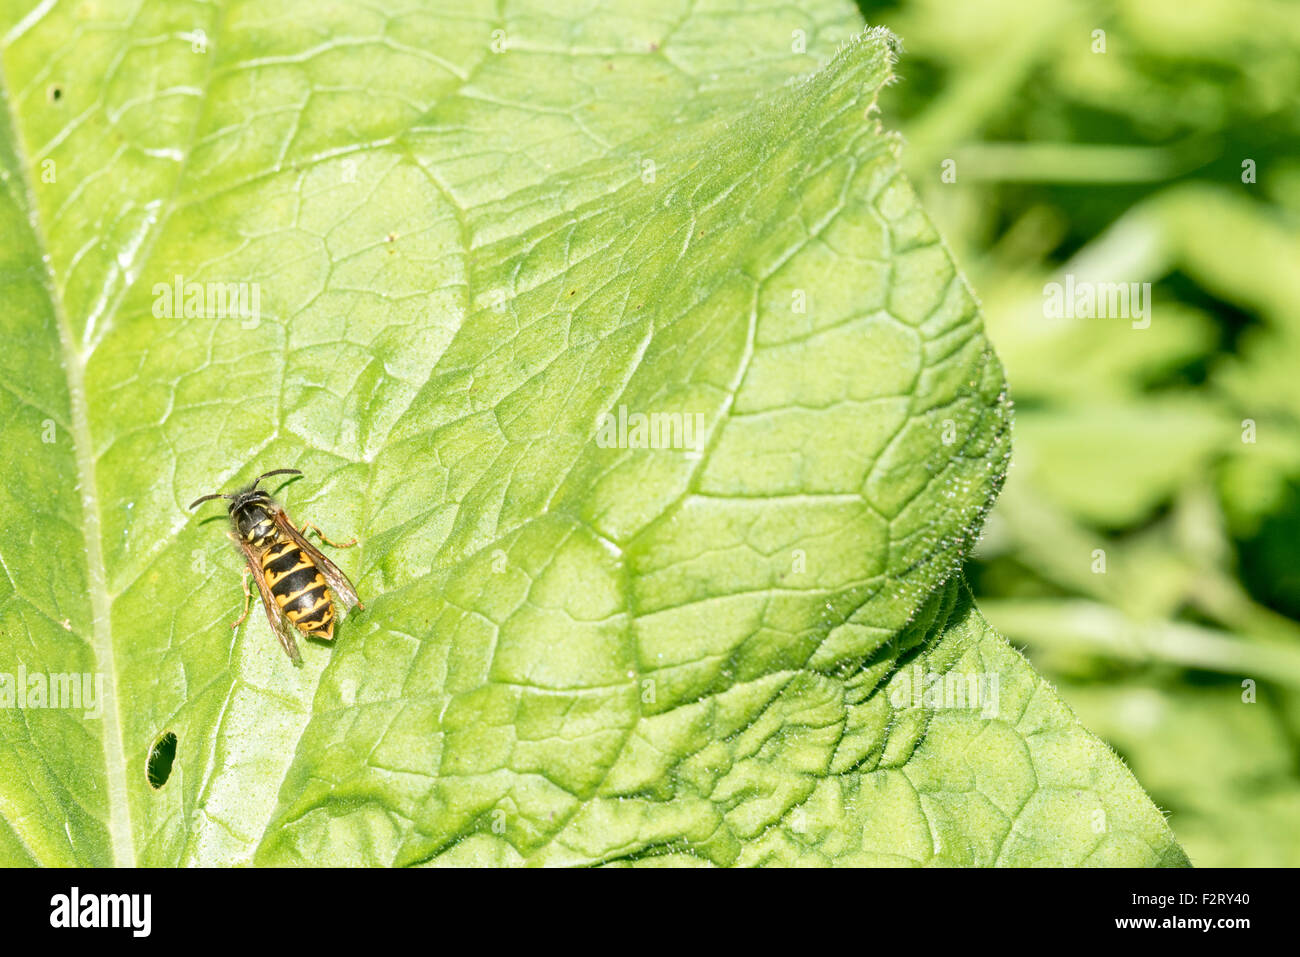 A single social wasp (Vespa) on a comfrey leaf Stock Photo